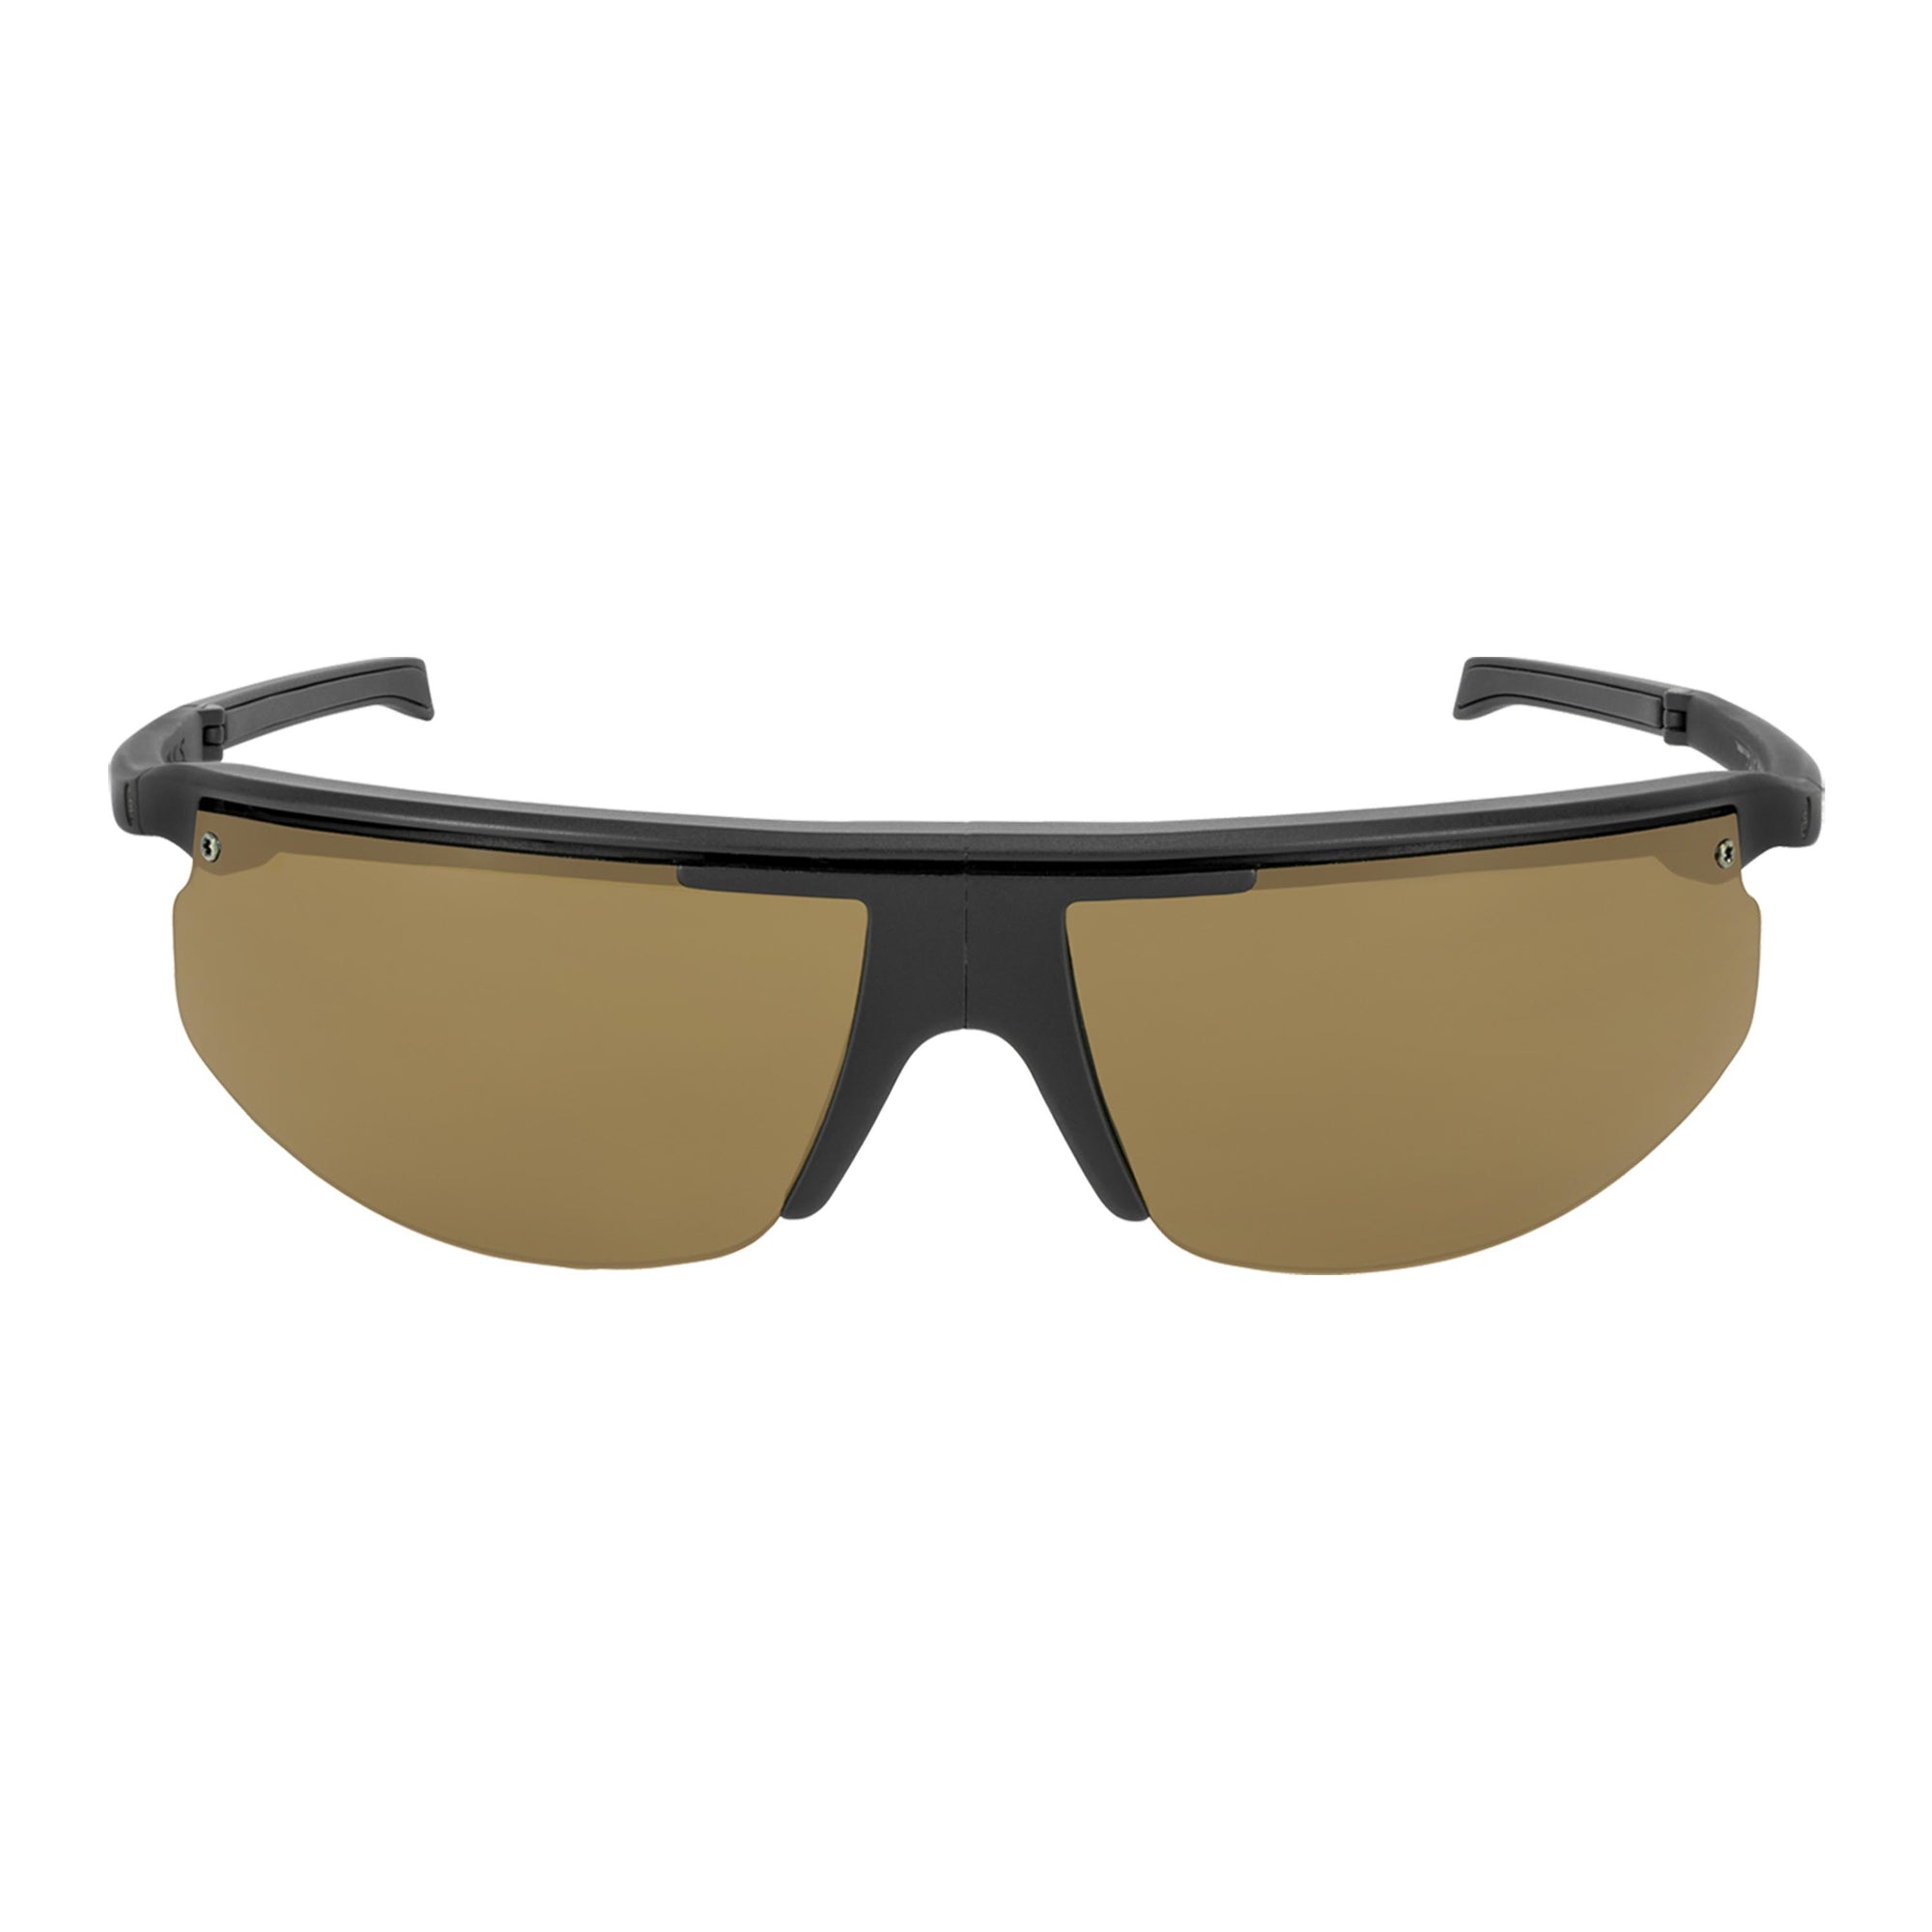 Popticals, Premium Compact Sunglasses, PopStar, 010040-BMNP, Polarized Sunglasses, Matte Black Frame, Brown Lenses, Glam View